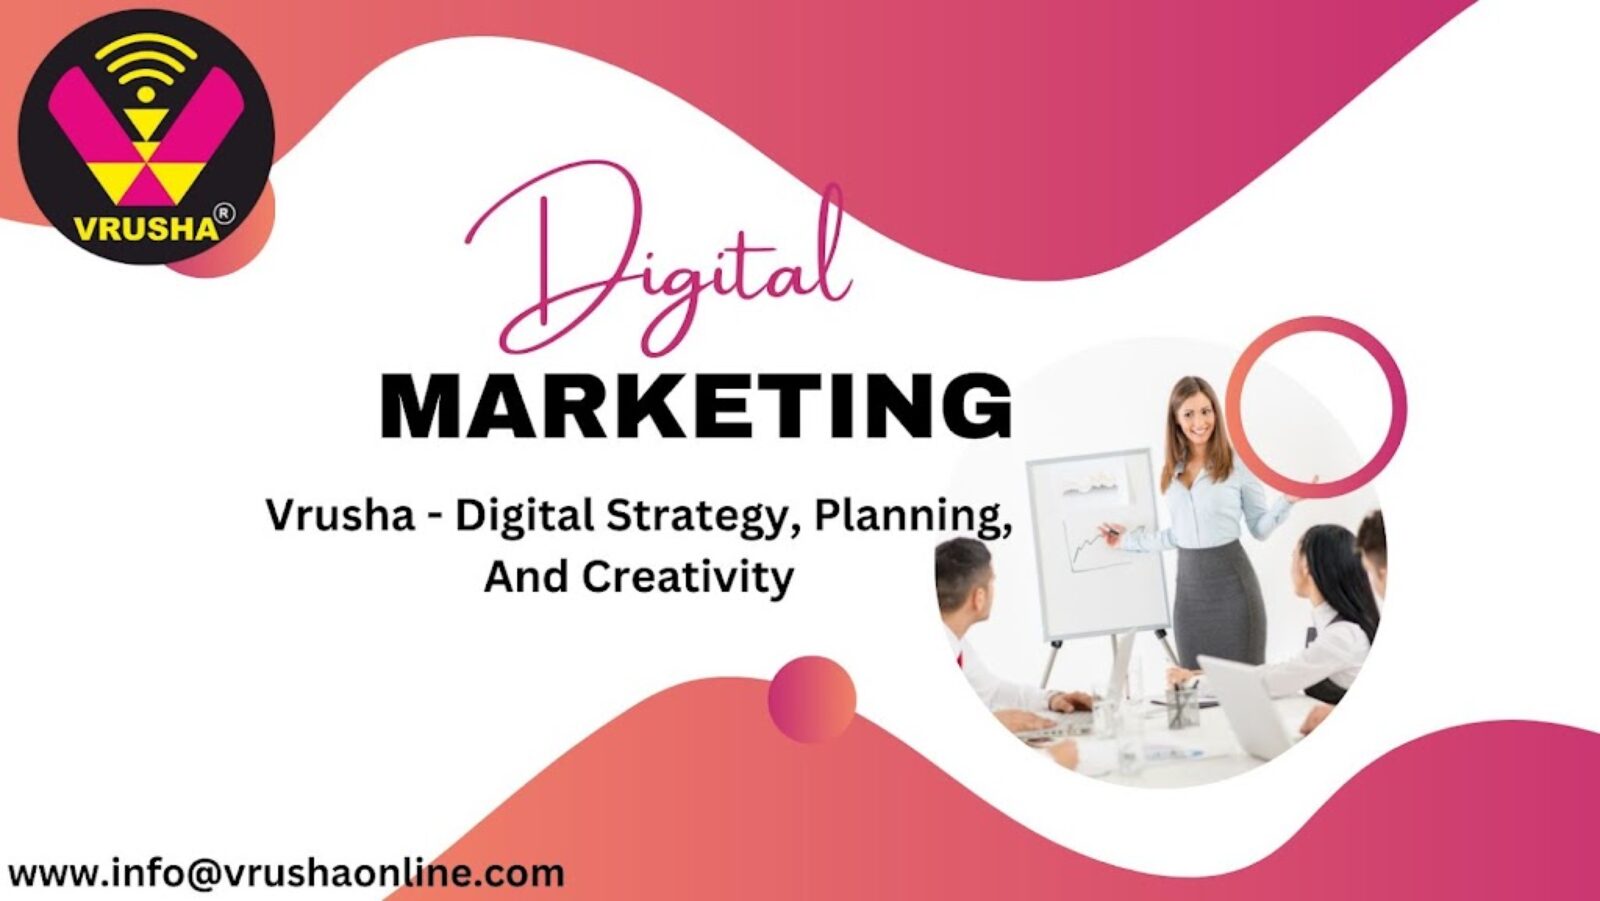 Vrusha – Digital Strategy, Planning, And Creativity